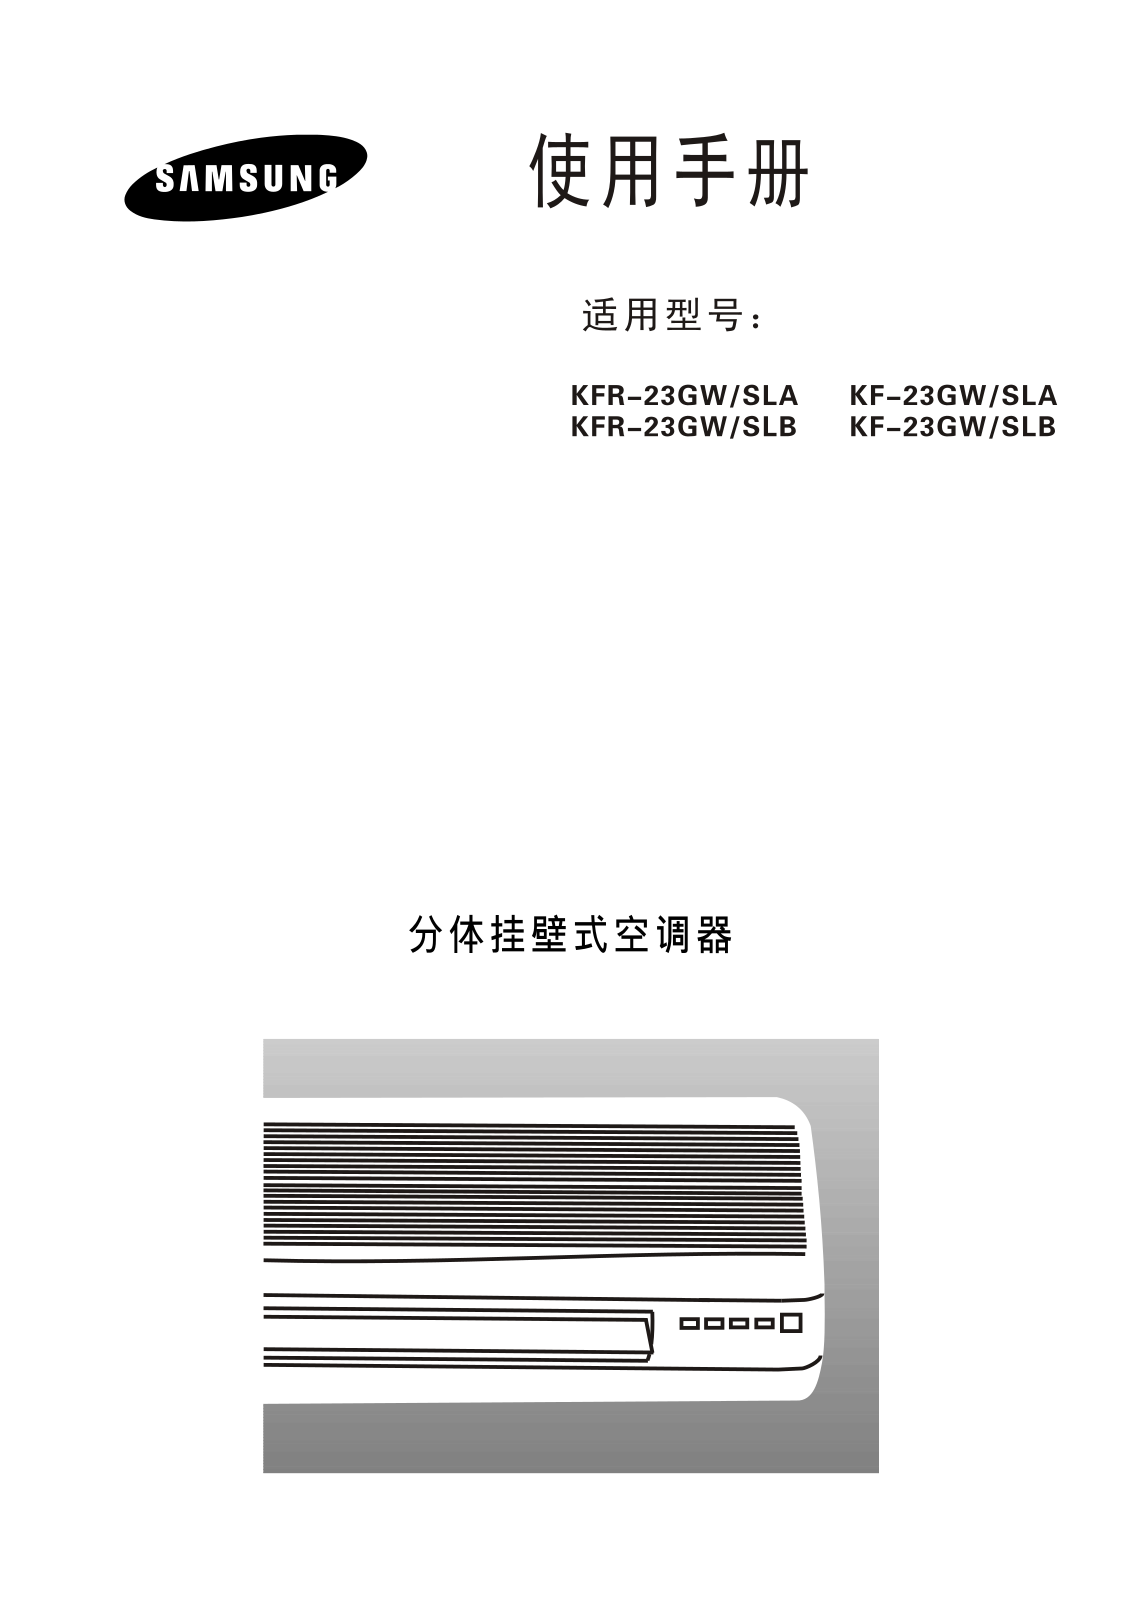 Samsung KFR-23W/SLA, KFR-23G/SLA, KFR-23GW/SLA, KF-23W/SLA, KF-23G/SLC User Manual